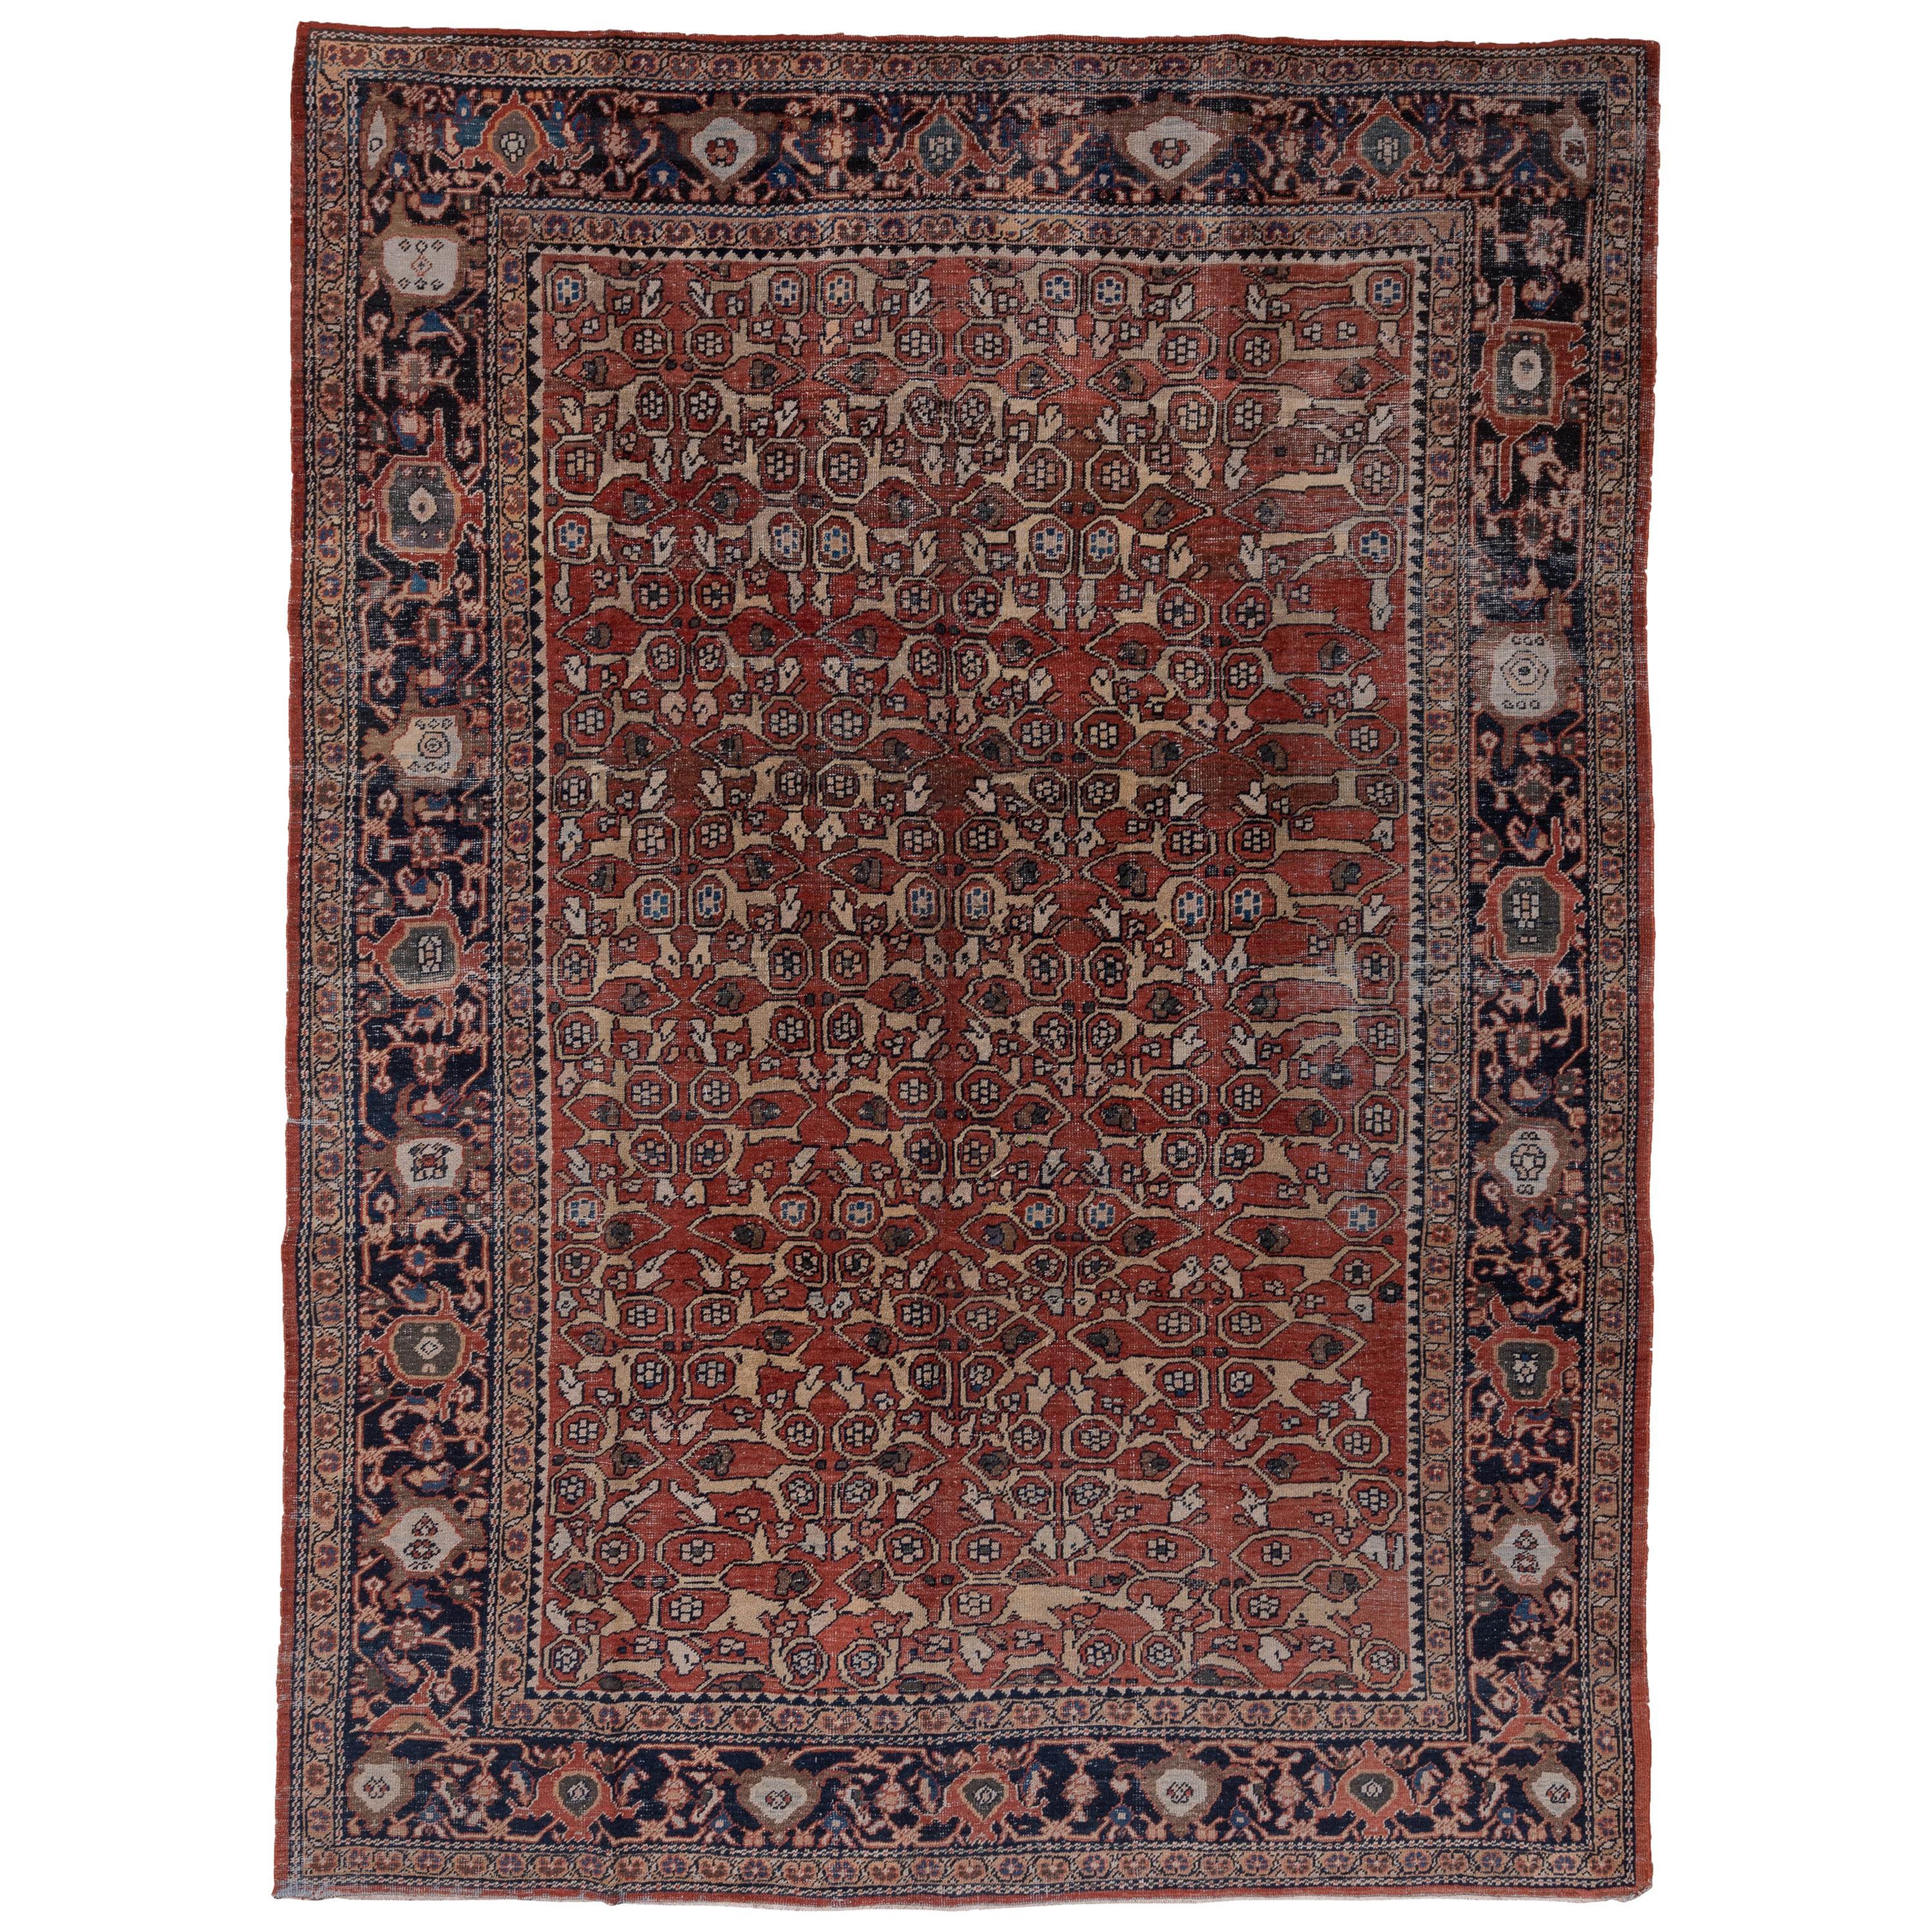 Antique Red Persian Mahal Carpet